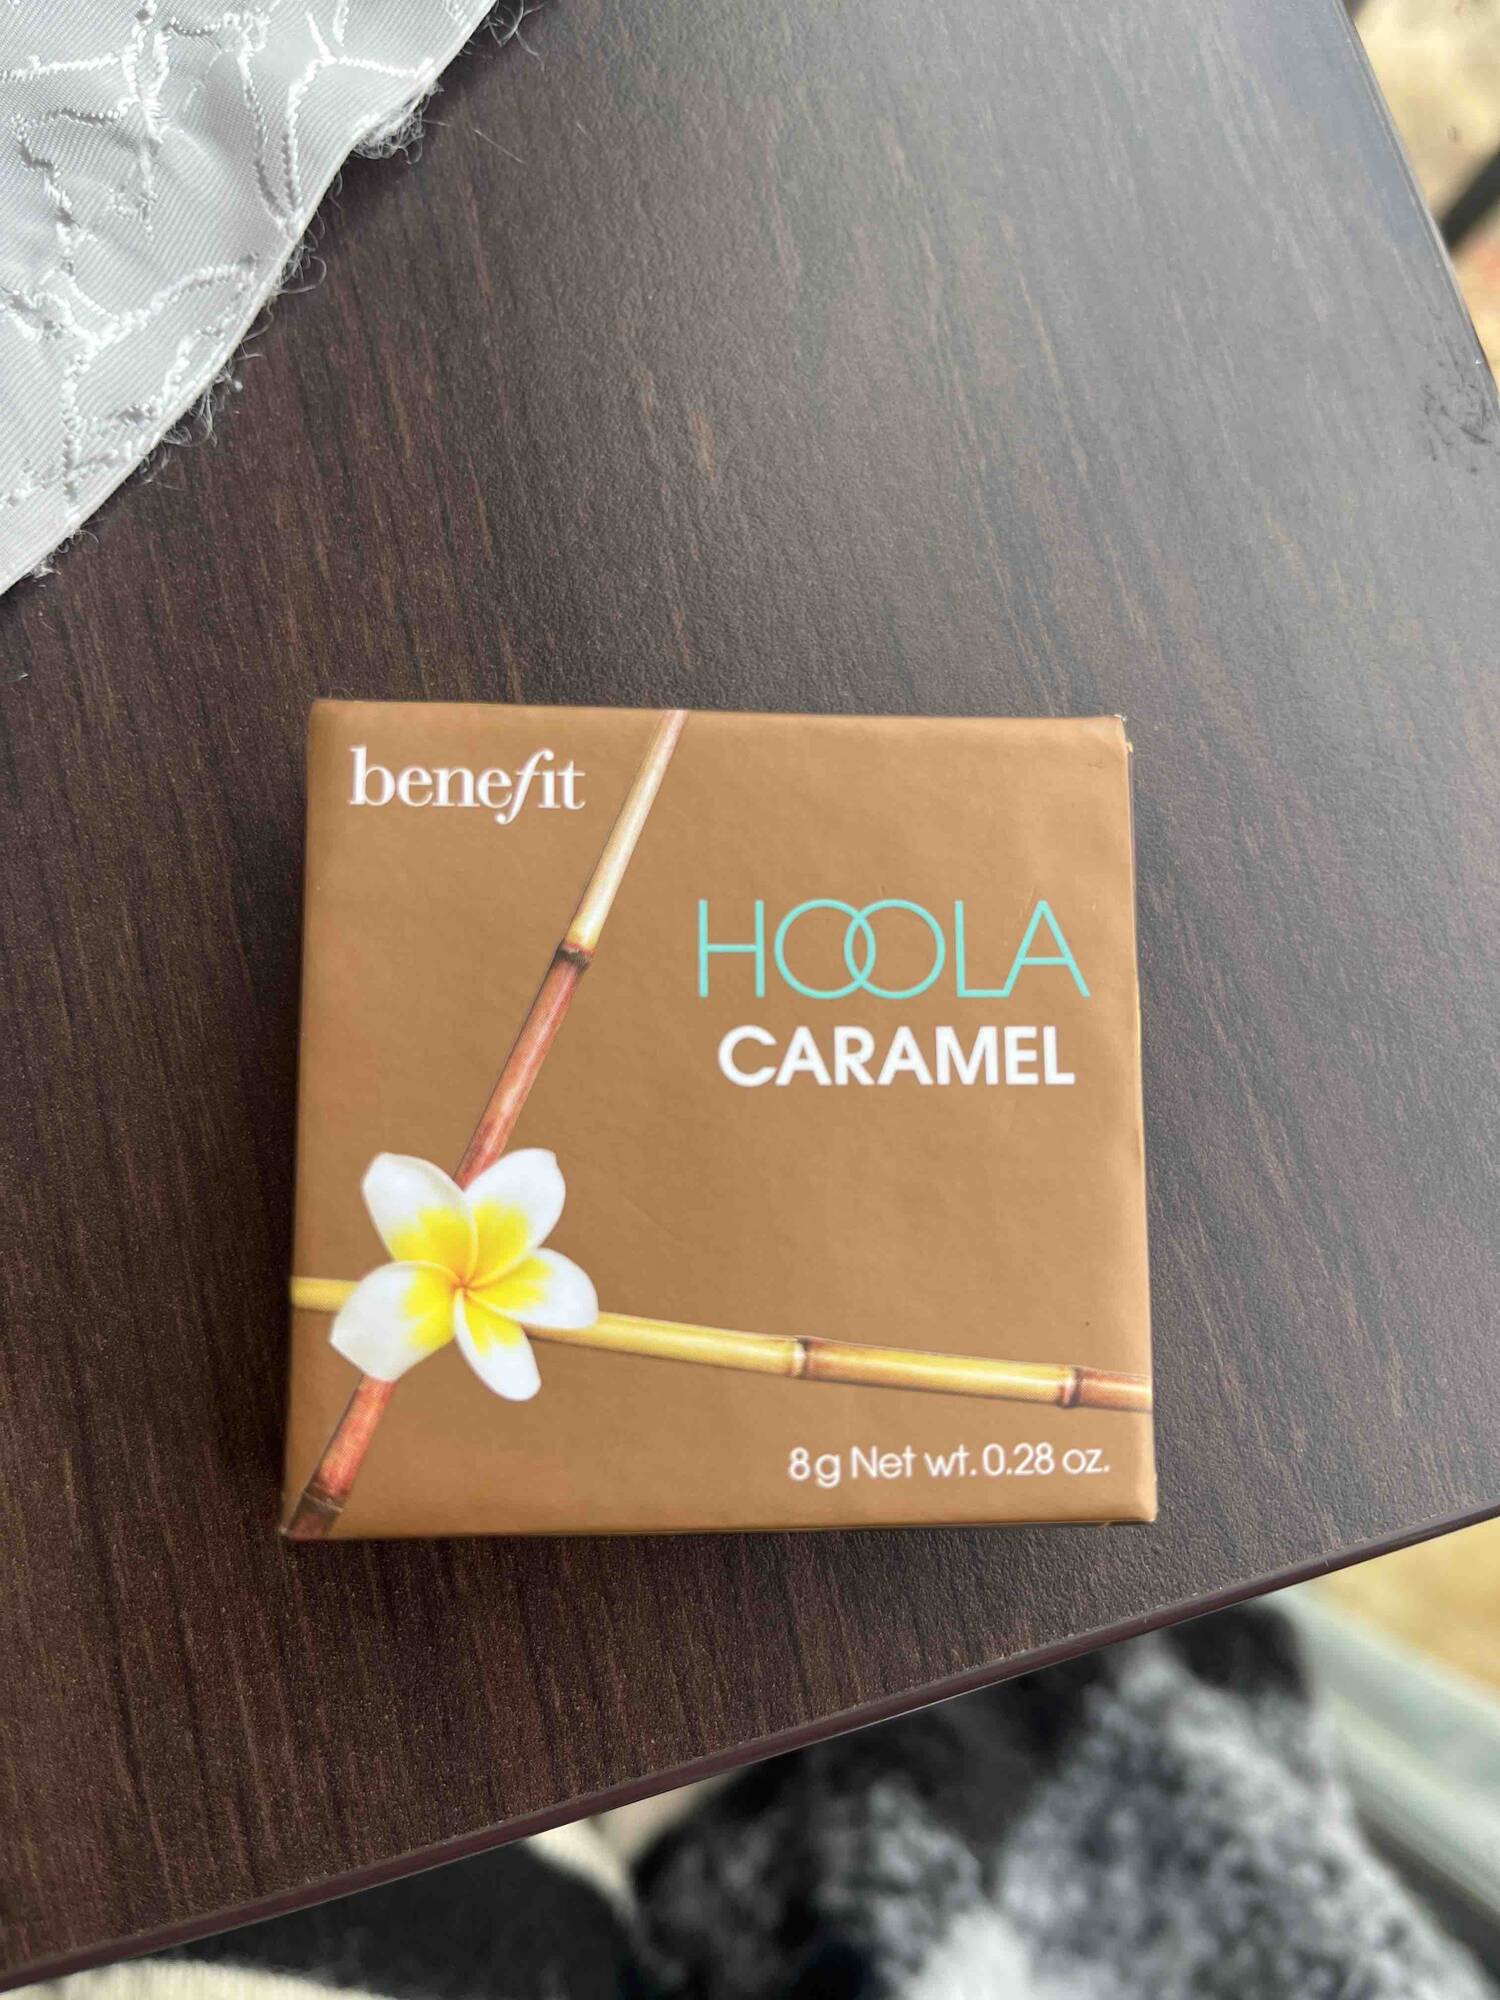 BENEFIT COSMETICS - Hoola caramel